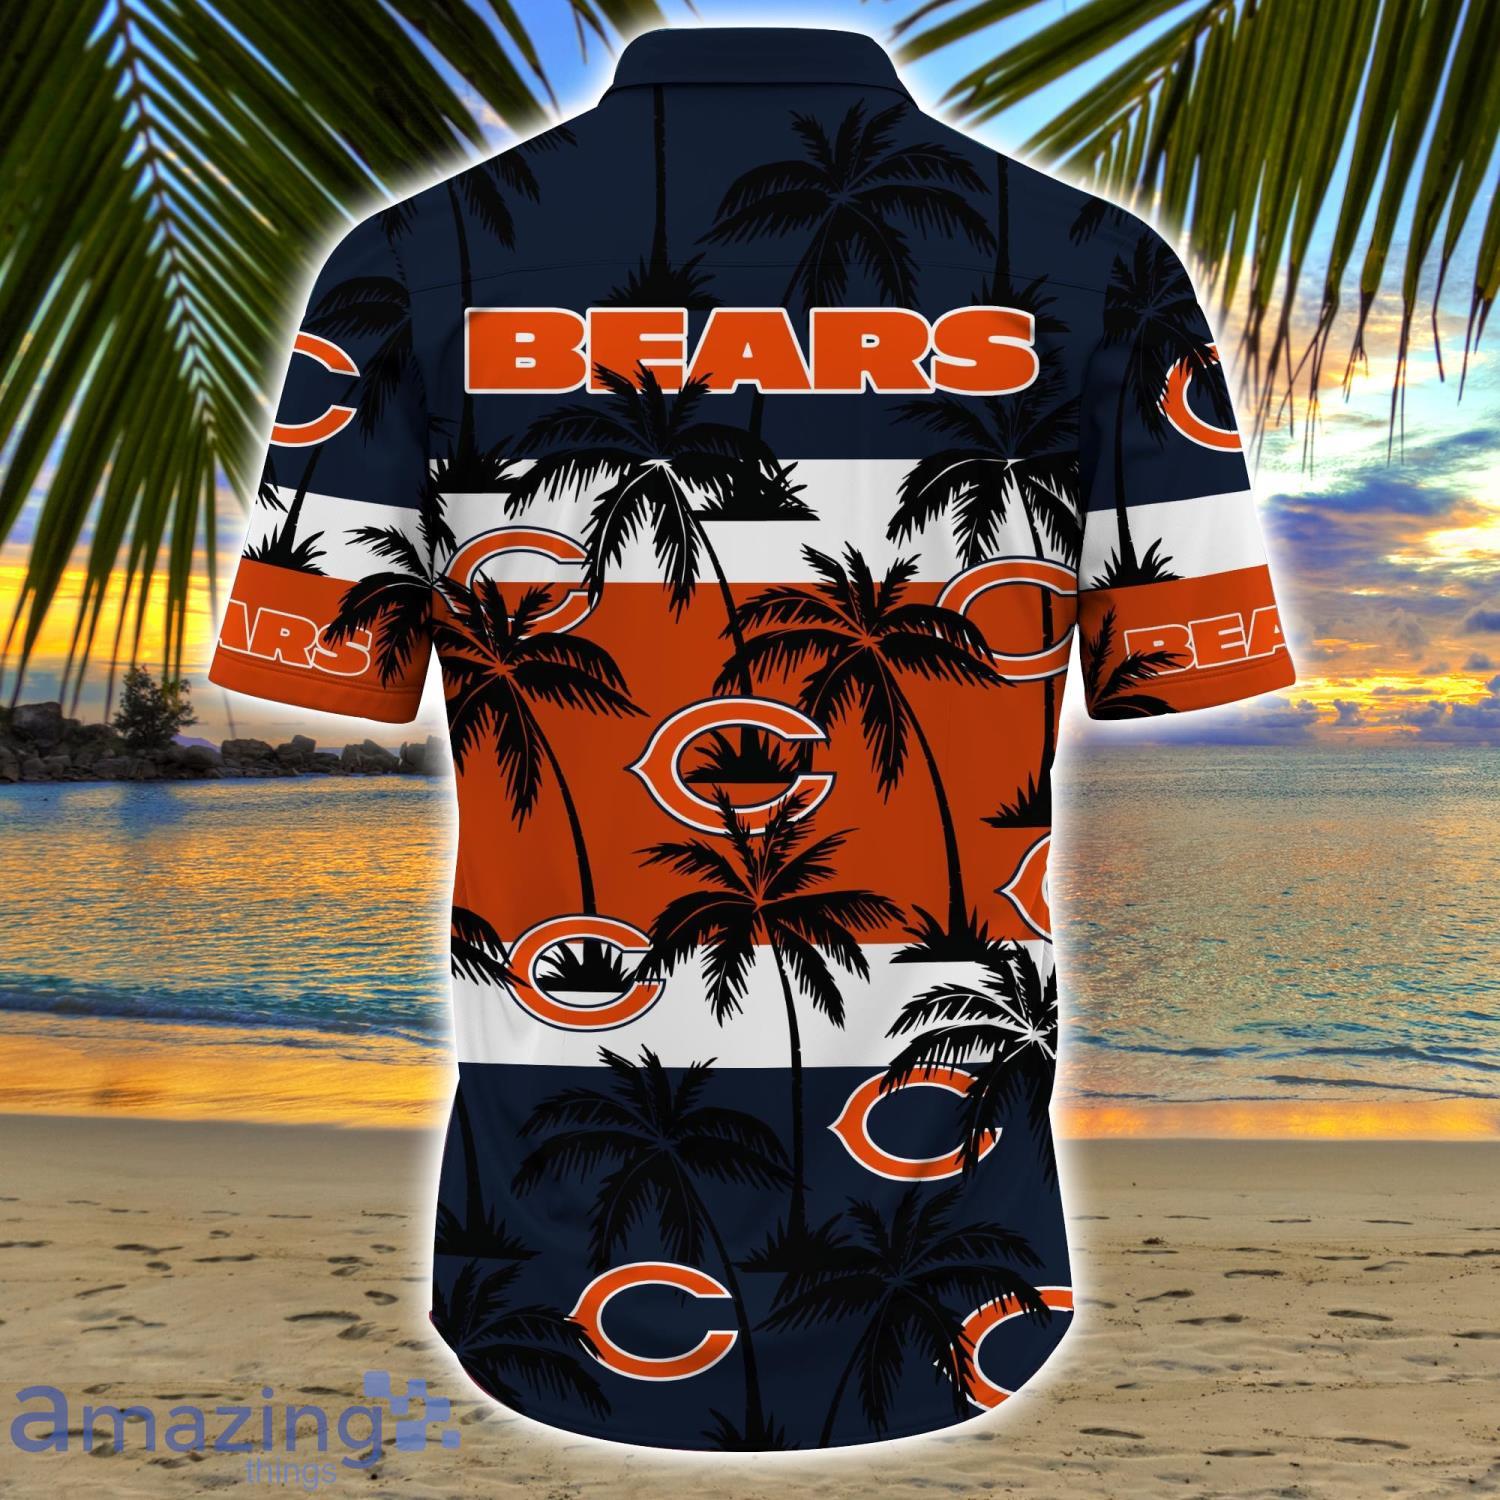 custom chicago bears jersey